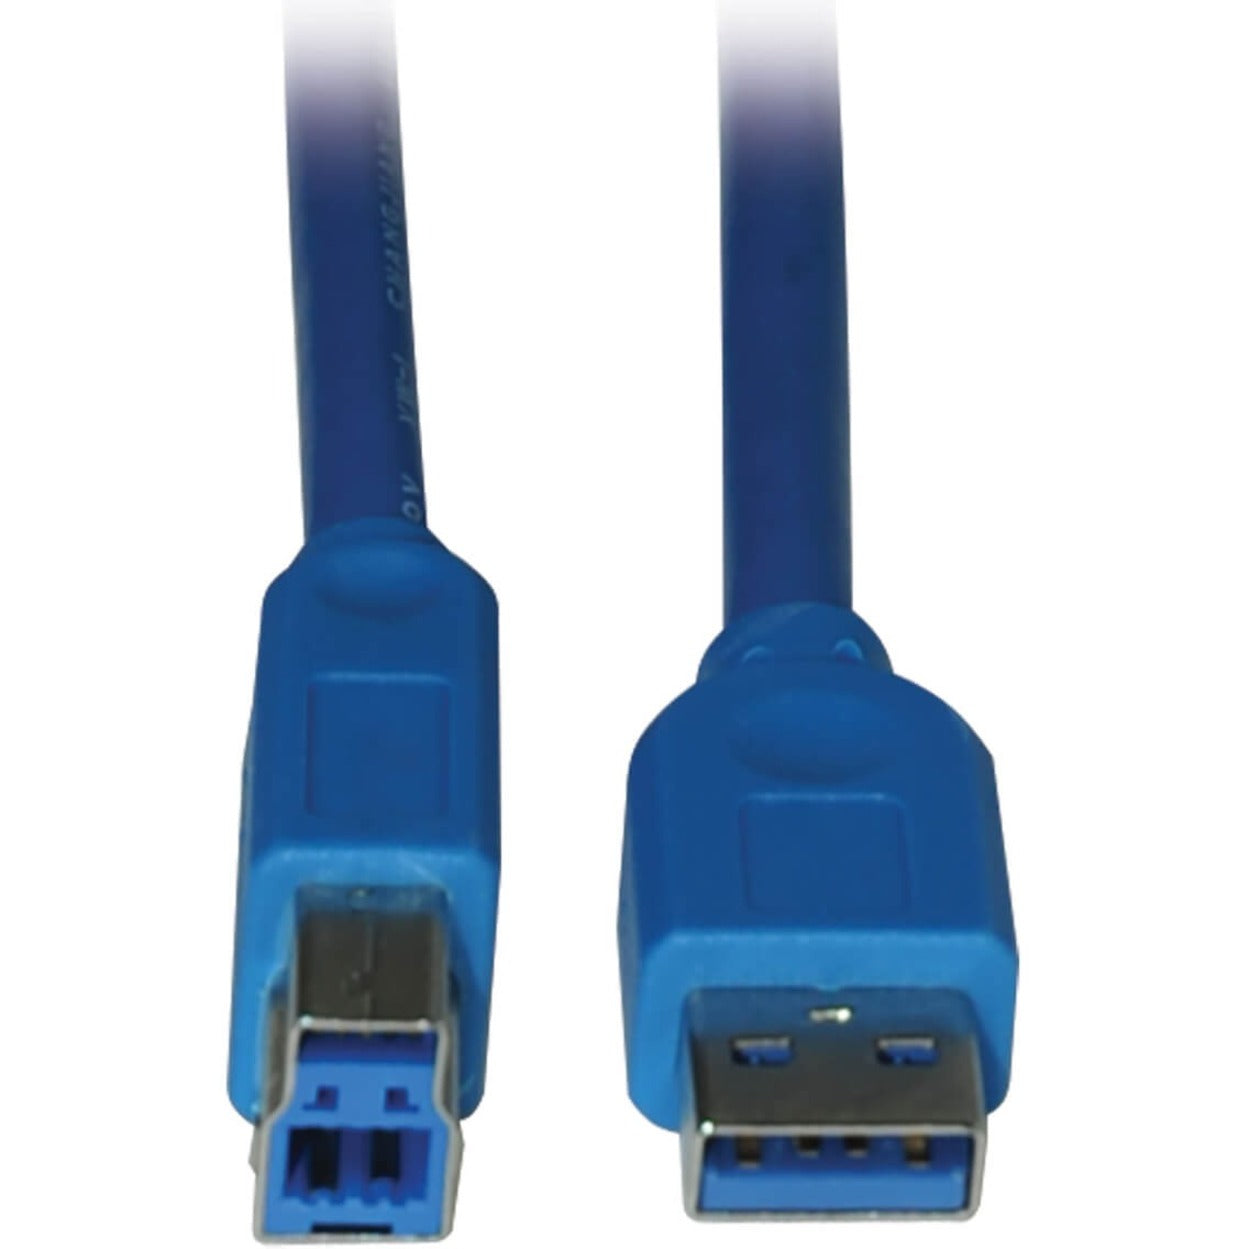 Tripp Lite U322-006 USB 3.0 超高速设备数据线AB 6英尺，蓝色 - 为您的设备提供高速数据传输 Tripp Lite 特力豹